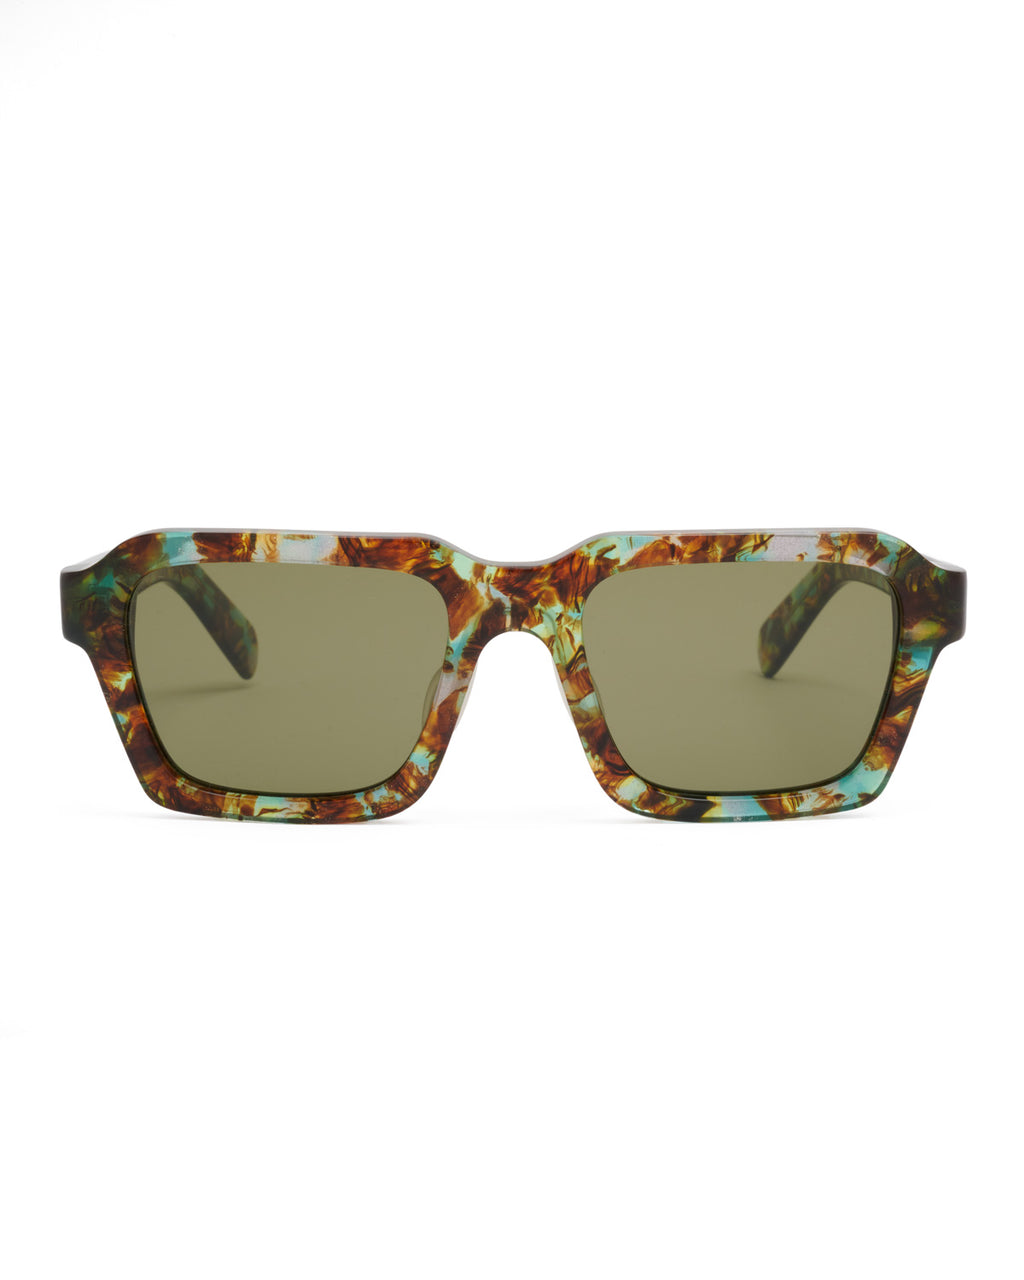 Staunton Post Modern Primitive Eye Protection Sunglasses - Forrest/Green 1